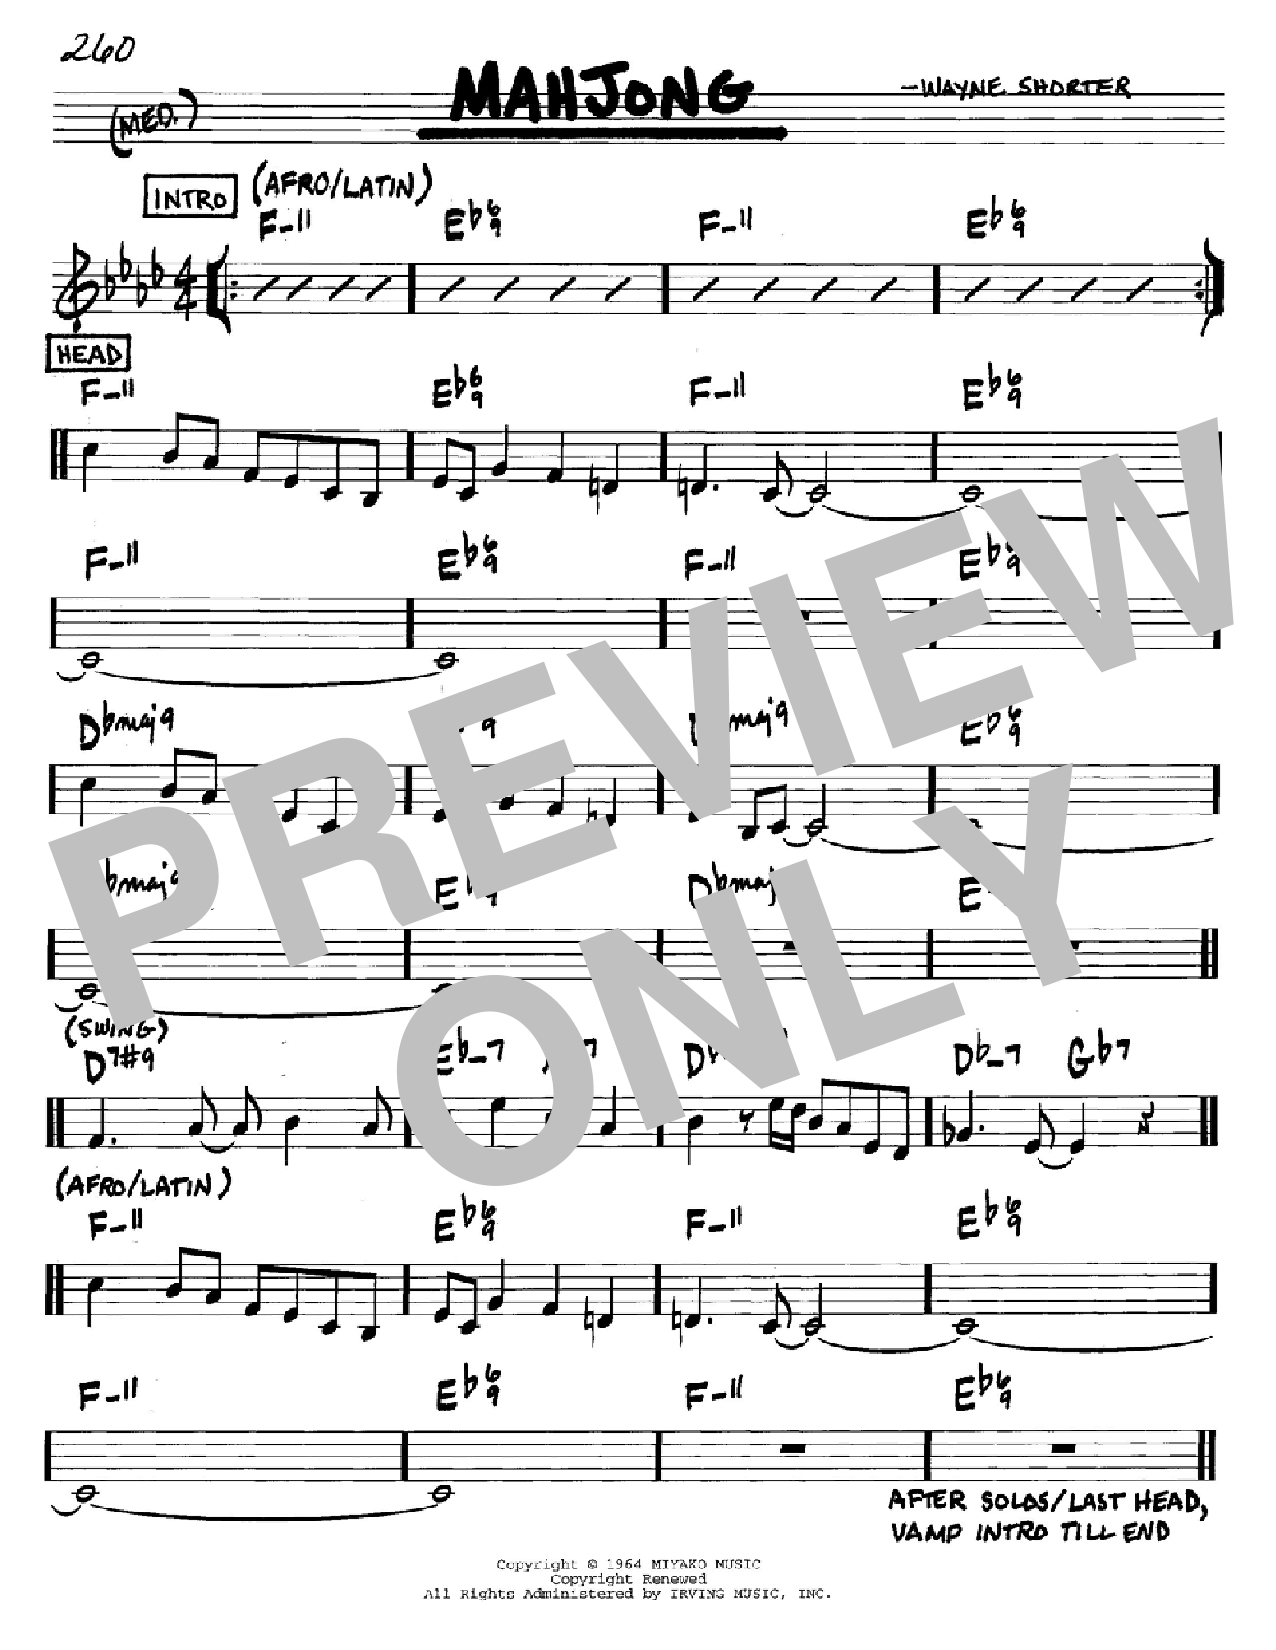 Wayne Shorter Mahjong Sheet Music Notes & Chords for Real Book - Melody & Chords - Bass Clef Instruments - Download or Print PDF